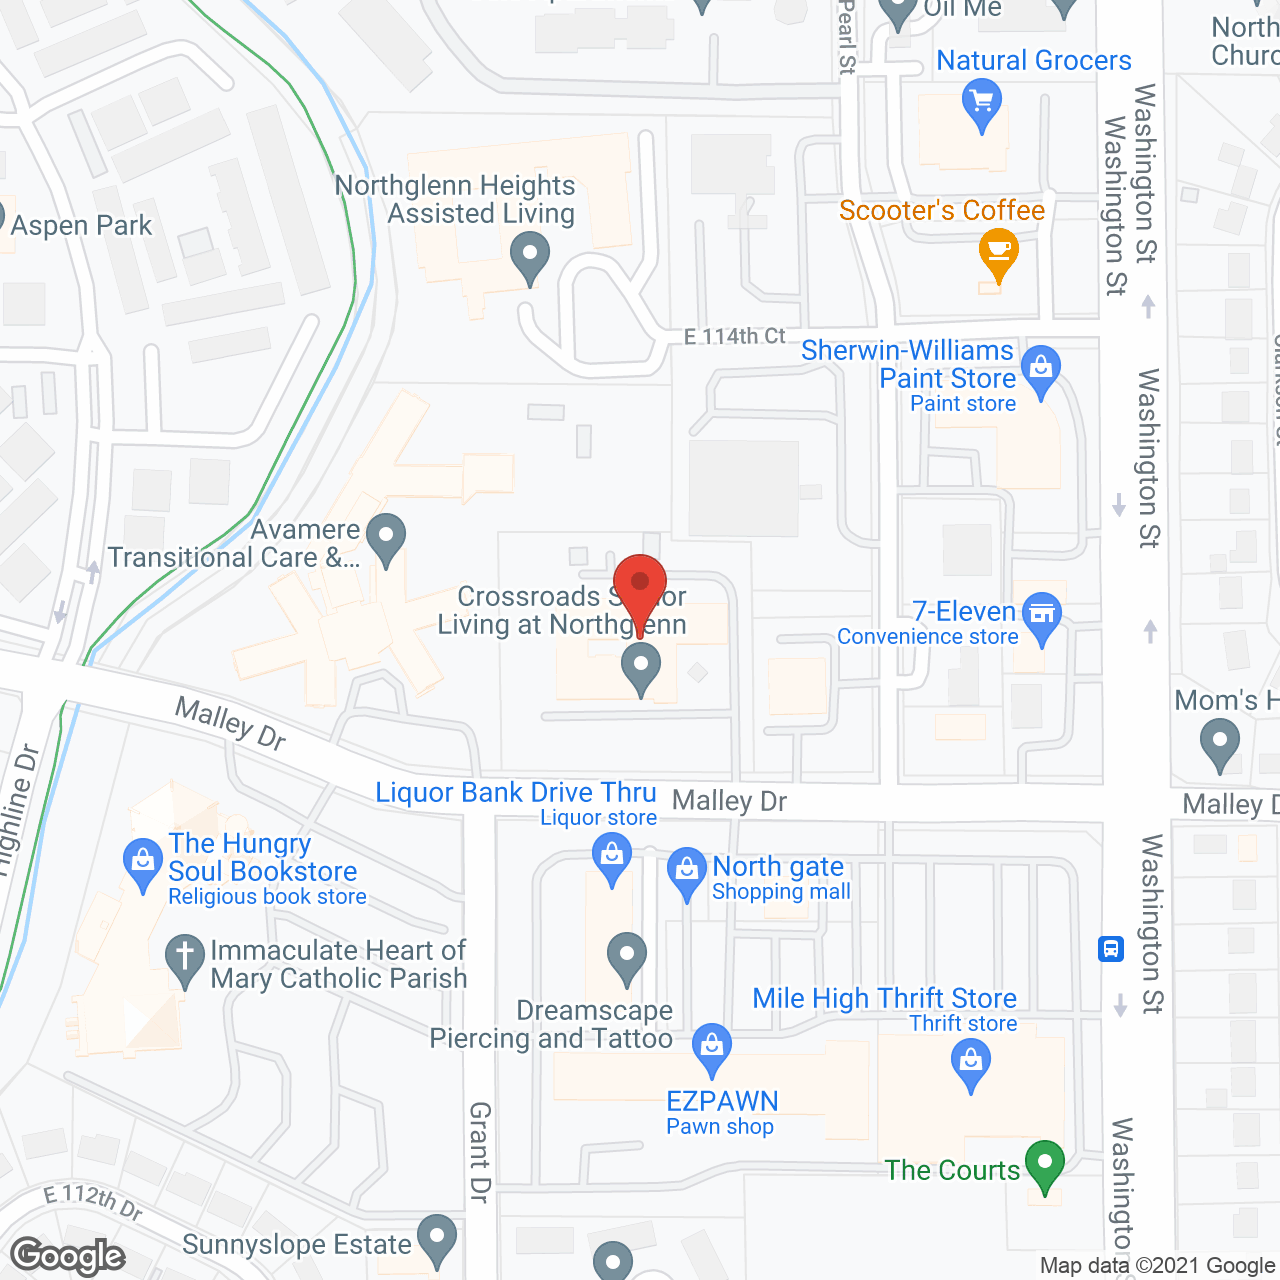 Crossroads at Northglenn in google map